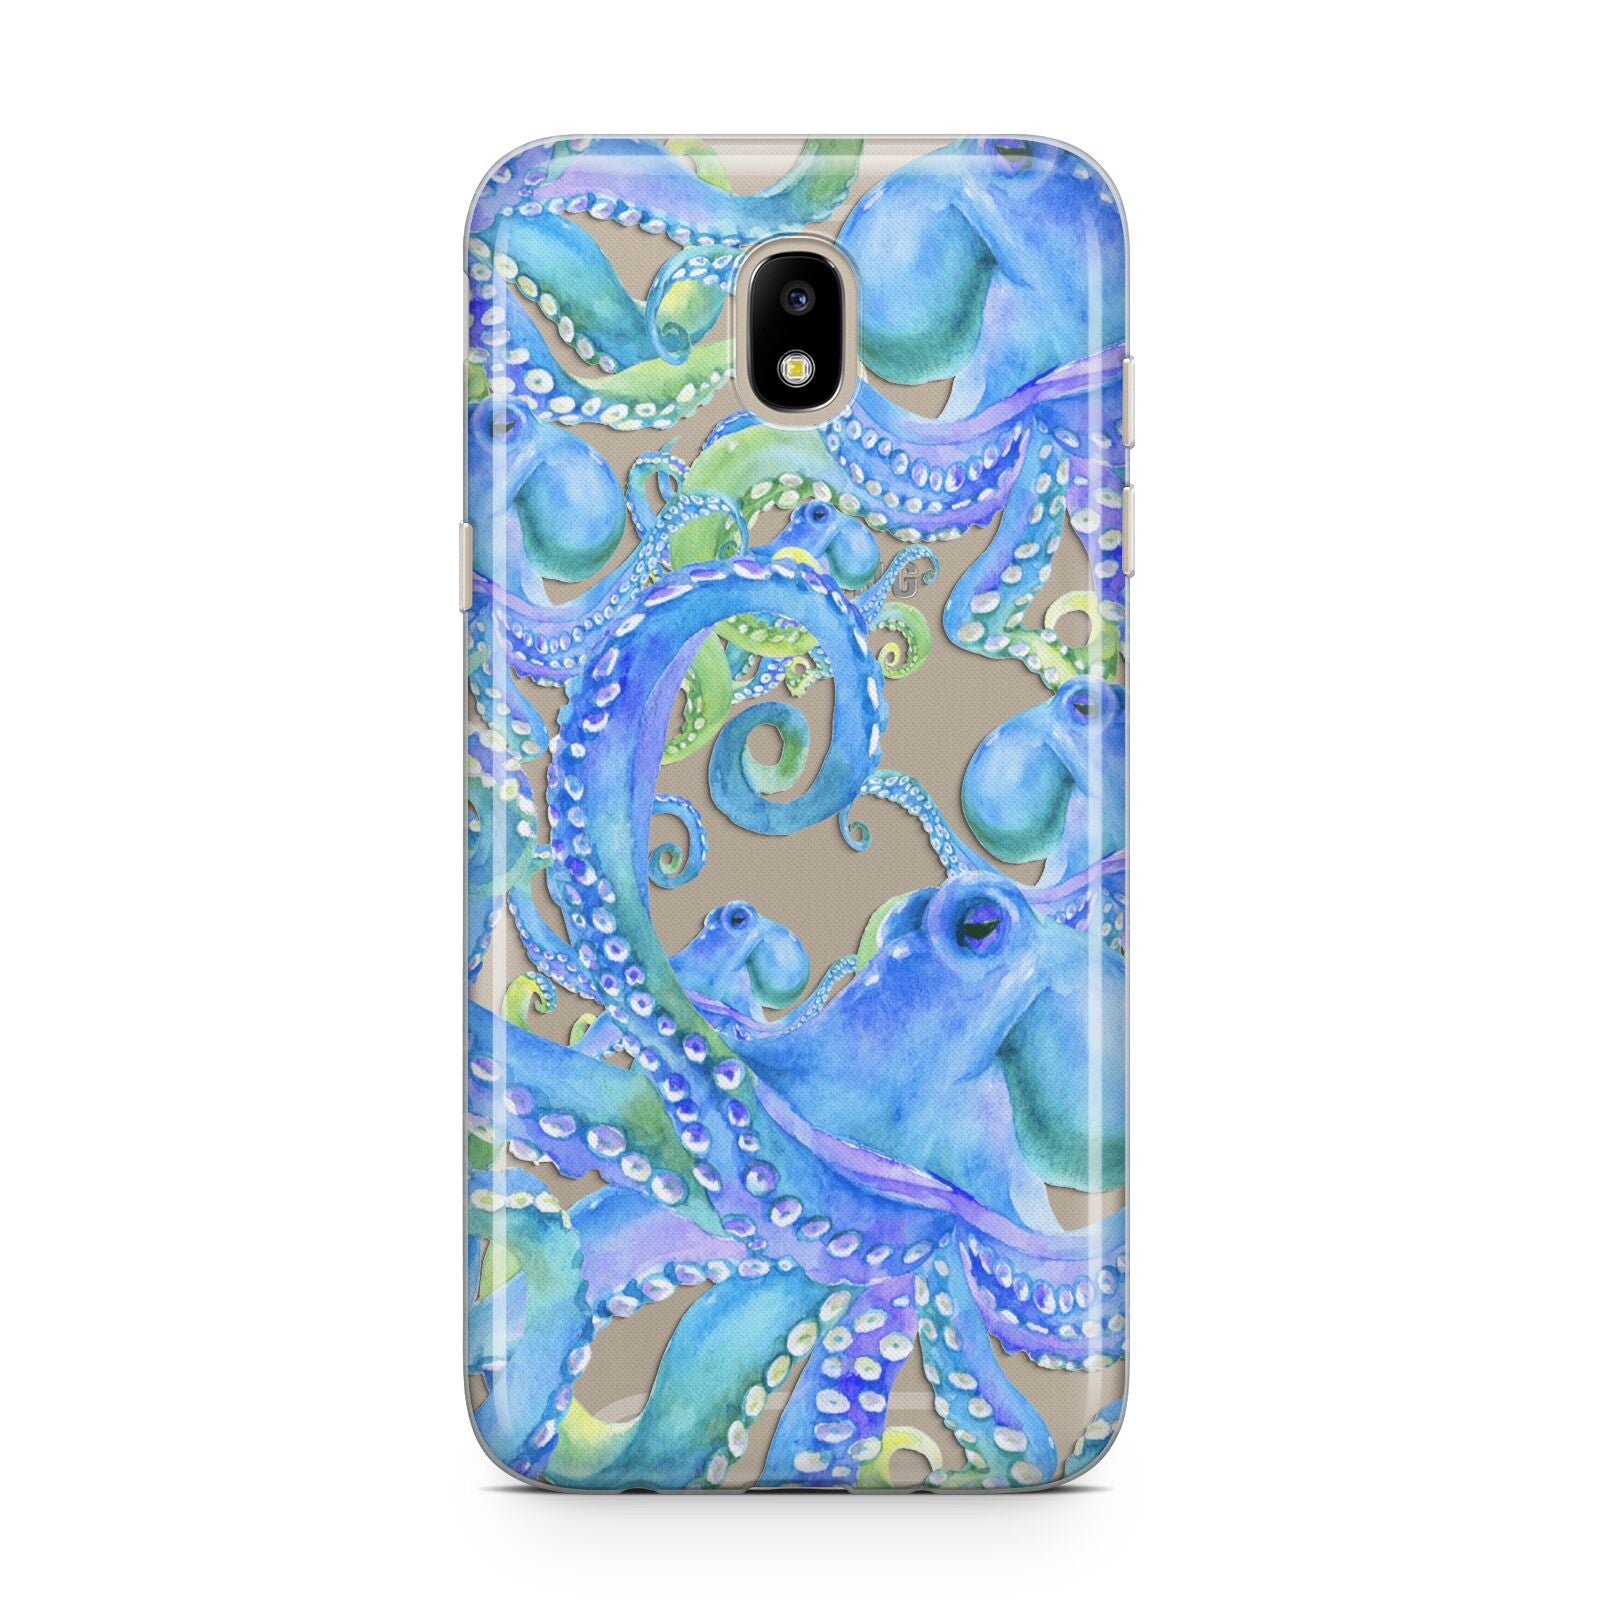 Octopus Samsung J5 2017 Case